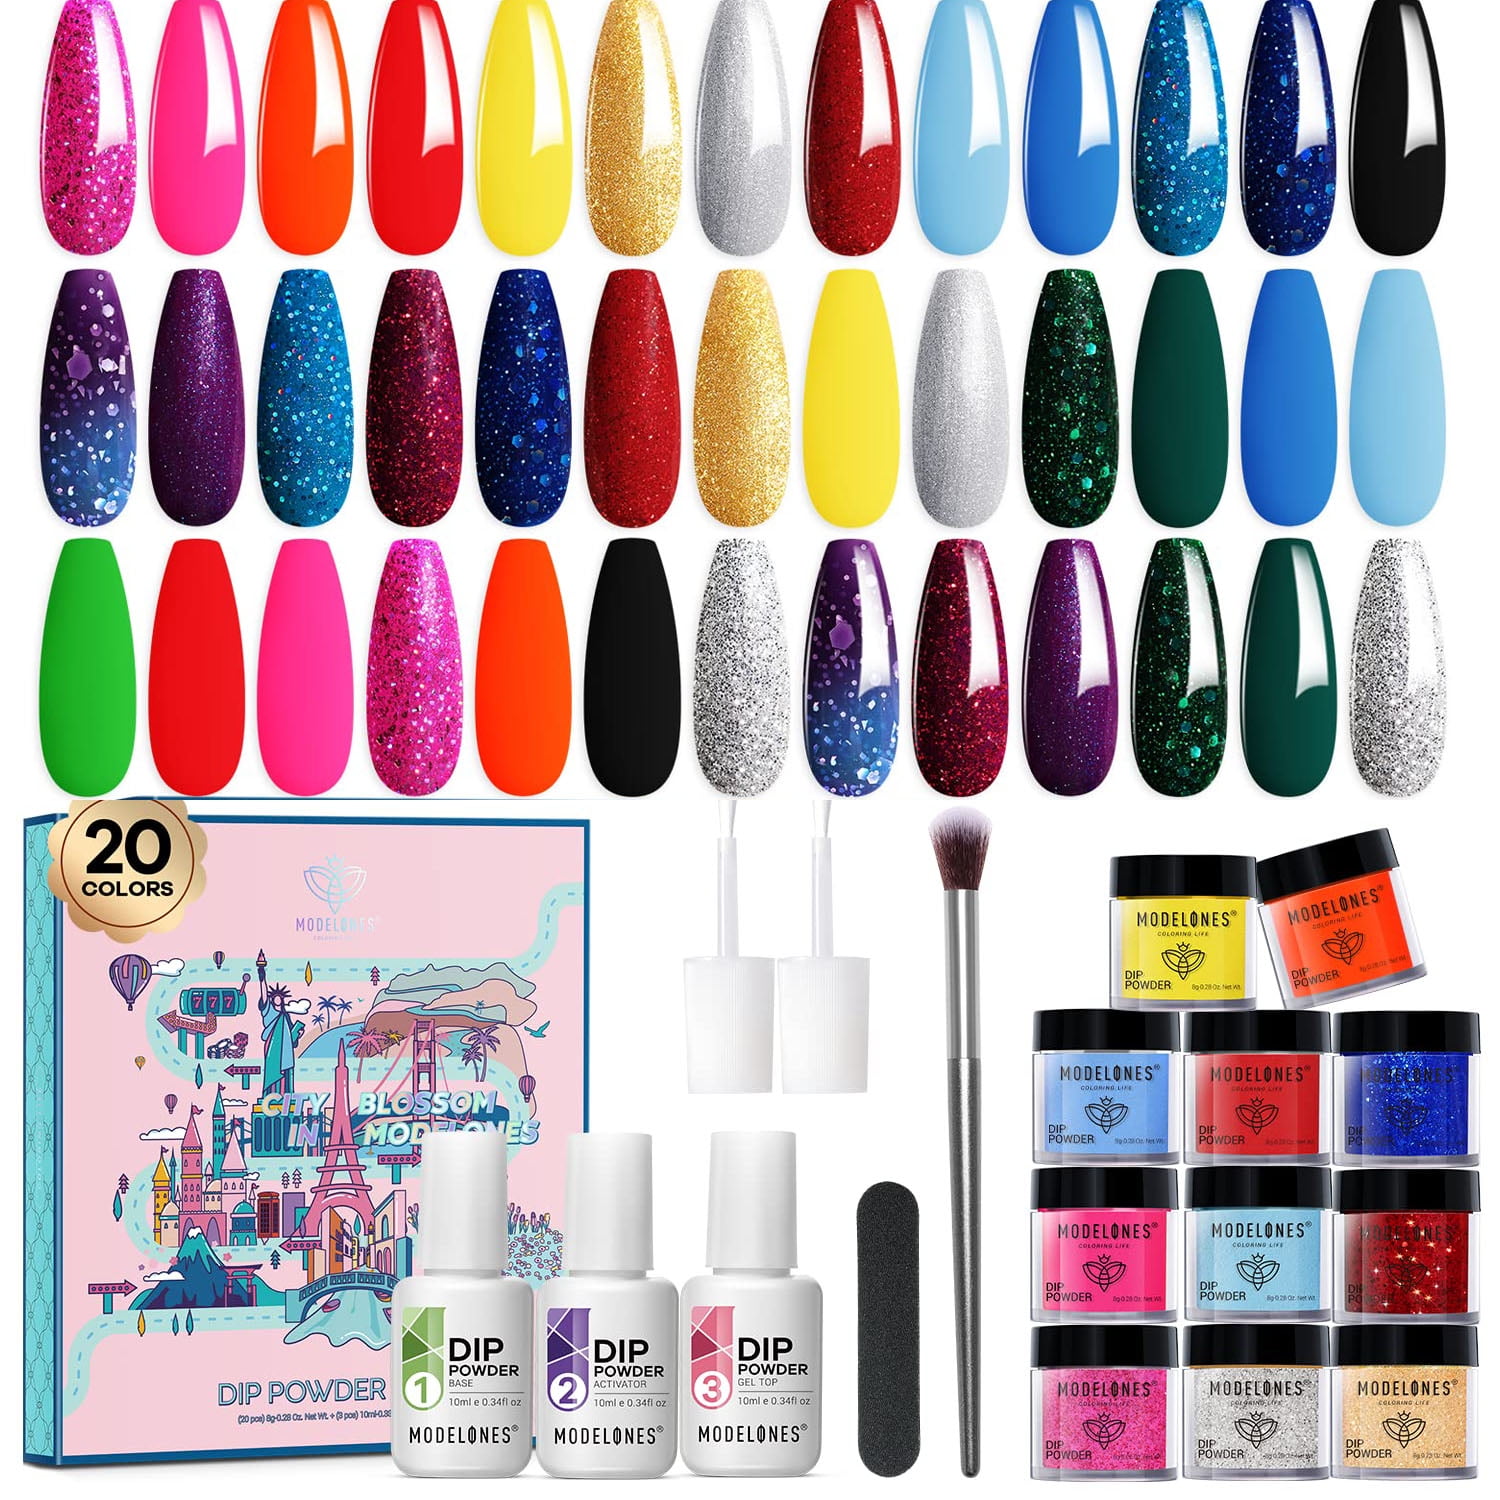 Modelones 20 Colors Dip Powder Nail Kit Starter, Popular Neon Pink ...